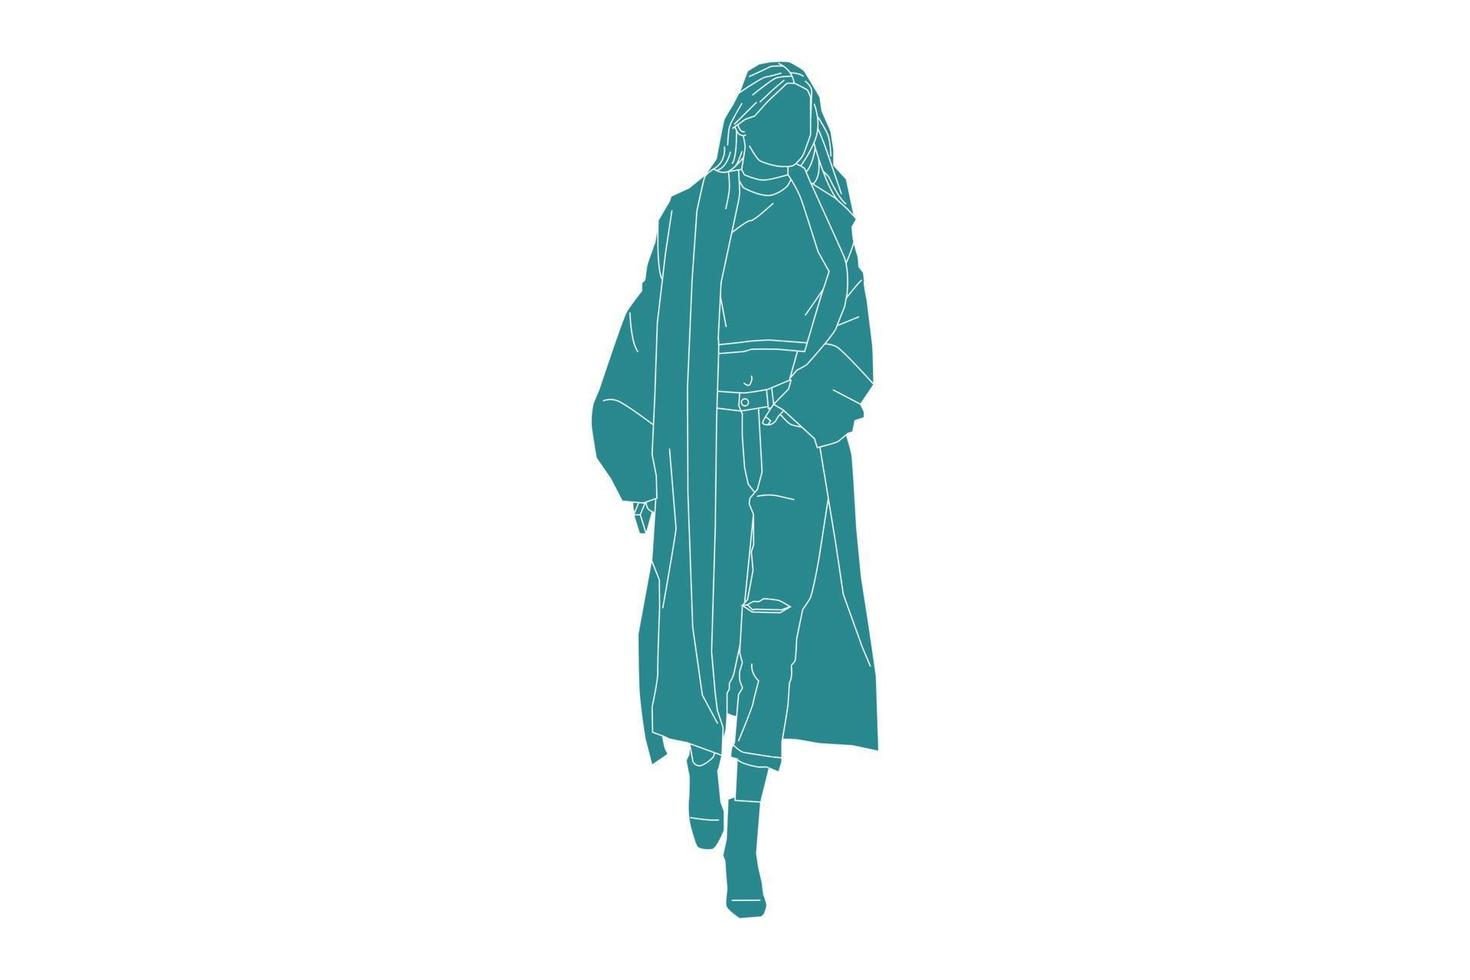 vektorillustration av fashionabla kvinna som går på sidokanten, platt stil med konturer vektor